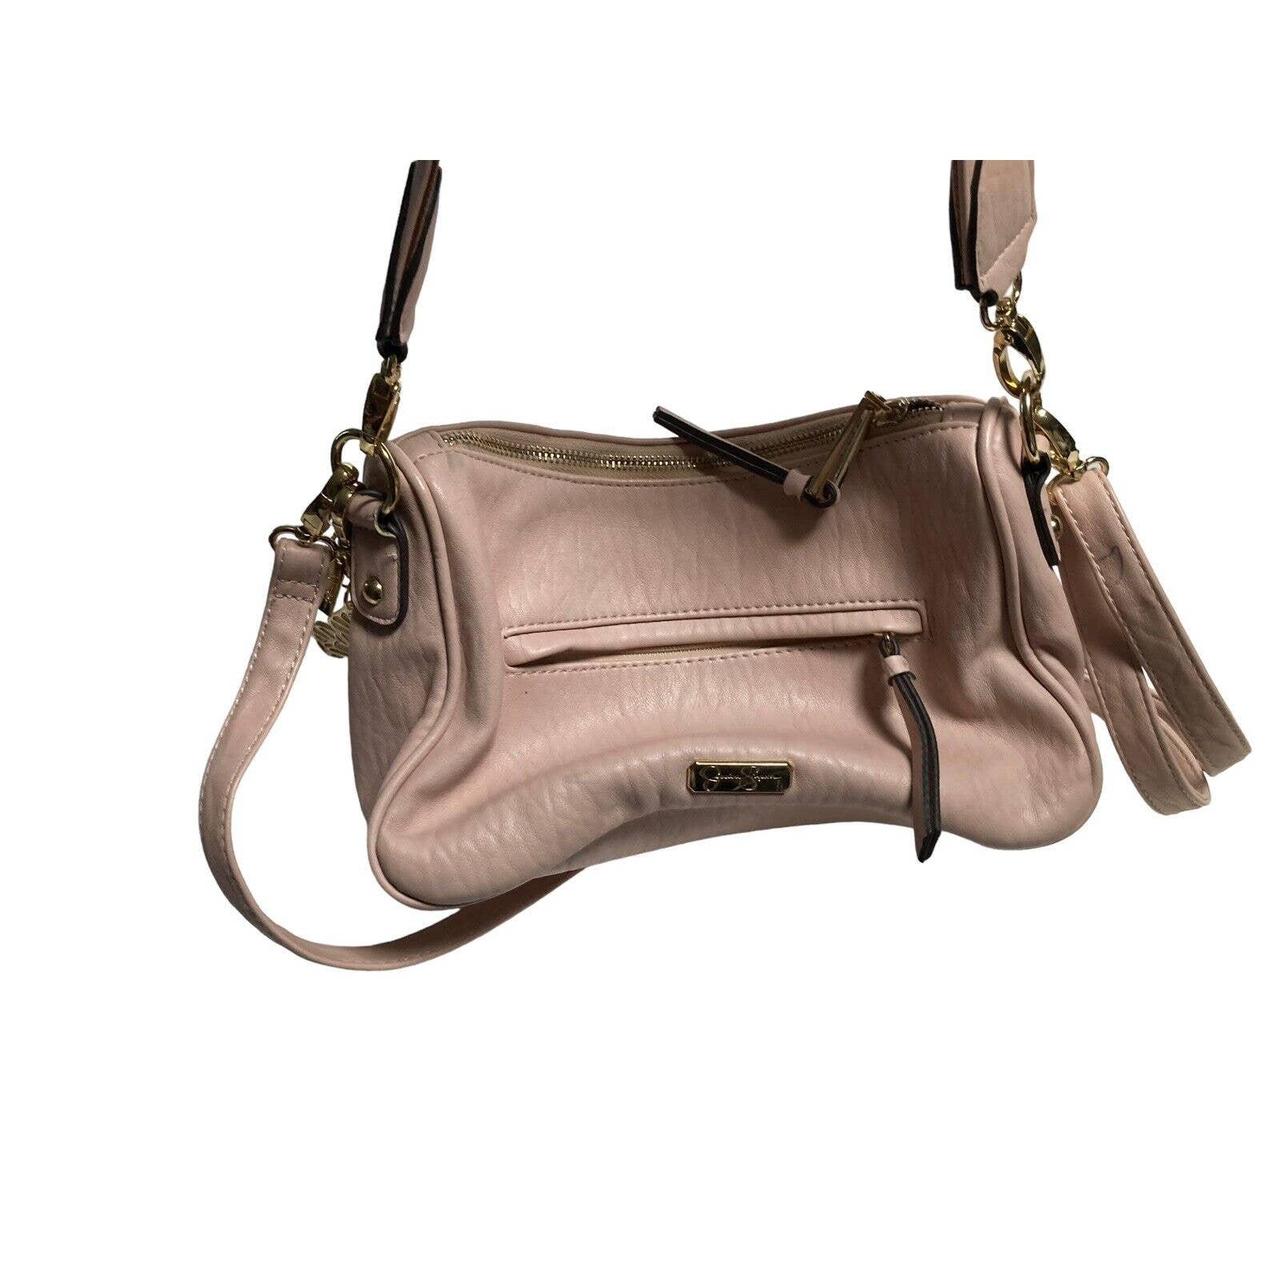 Hi explore page, Jessica Simpson purse. Large pink - Depop